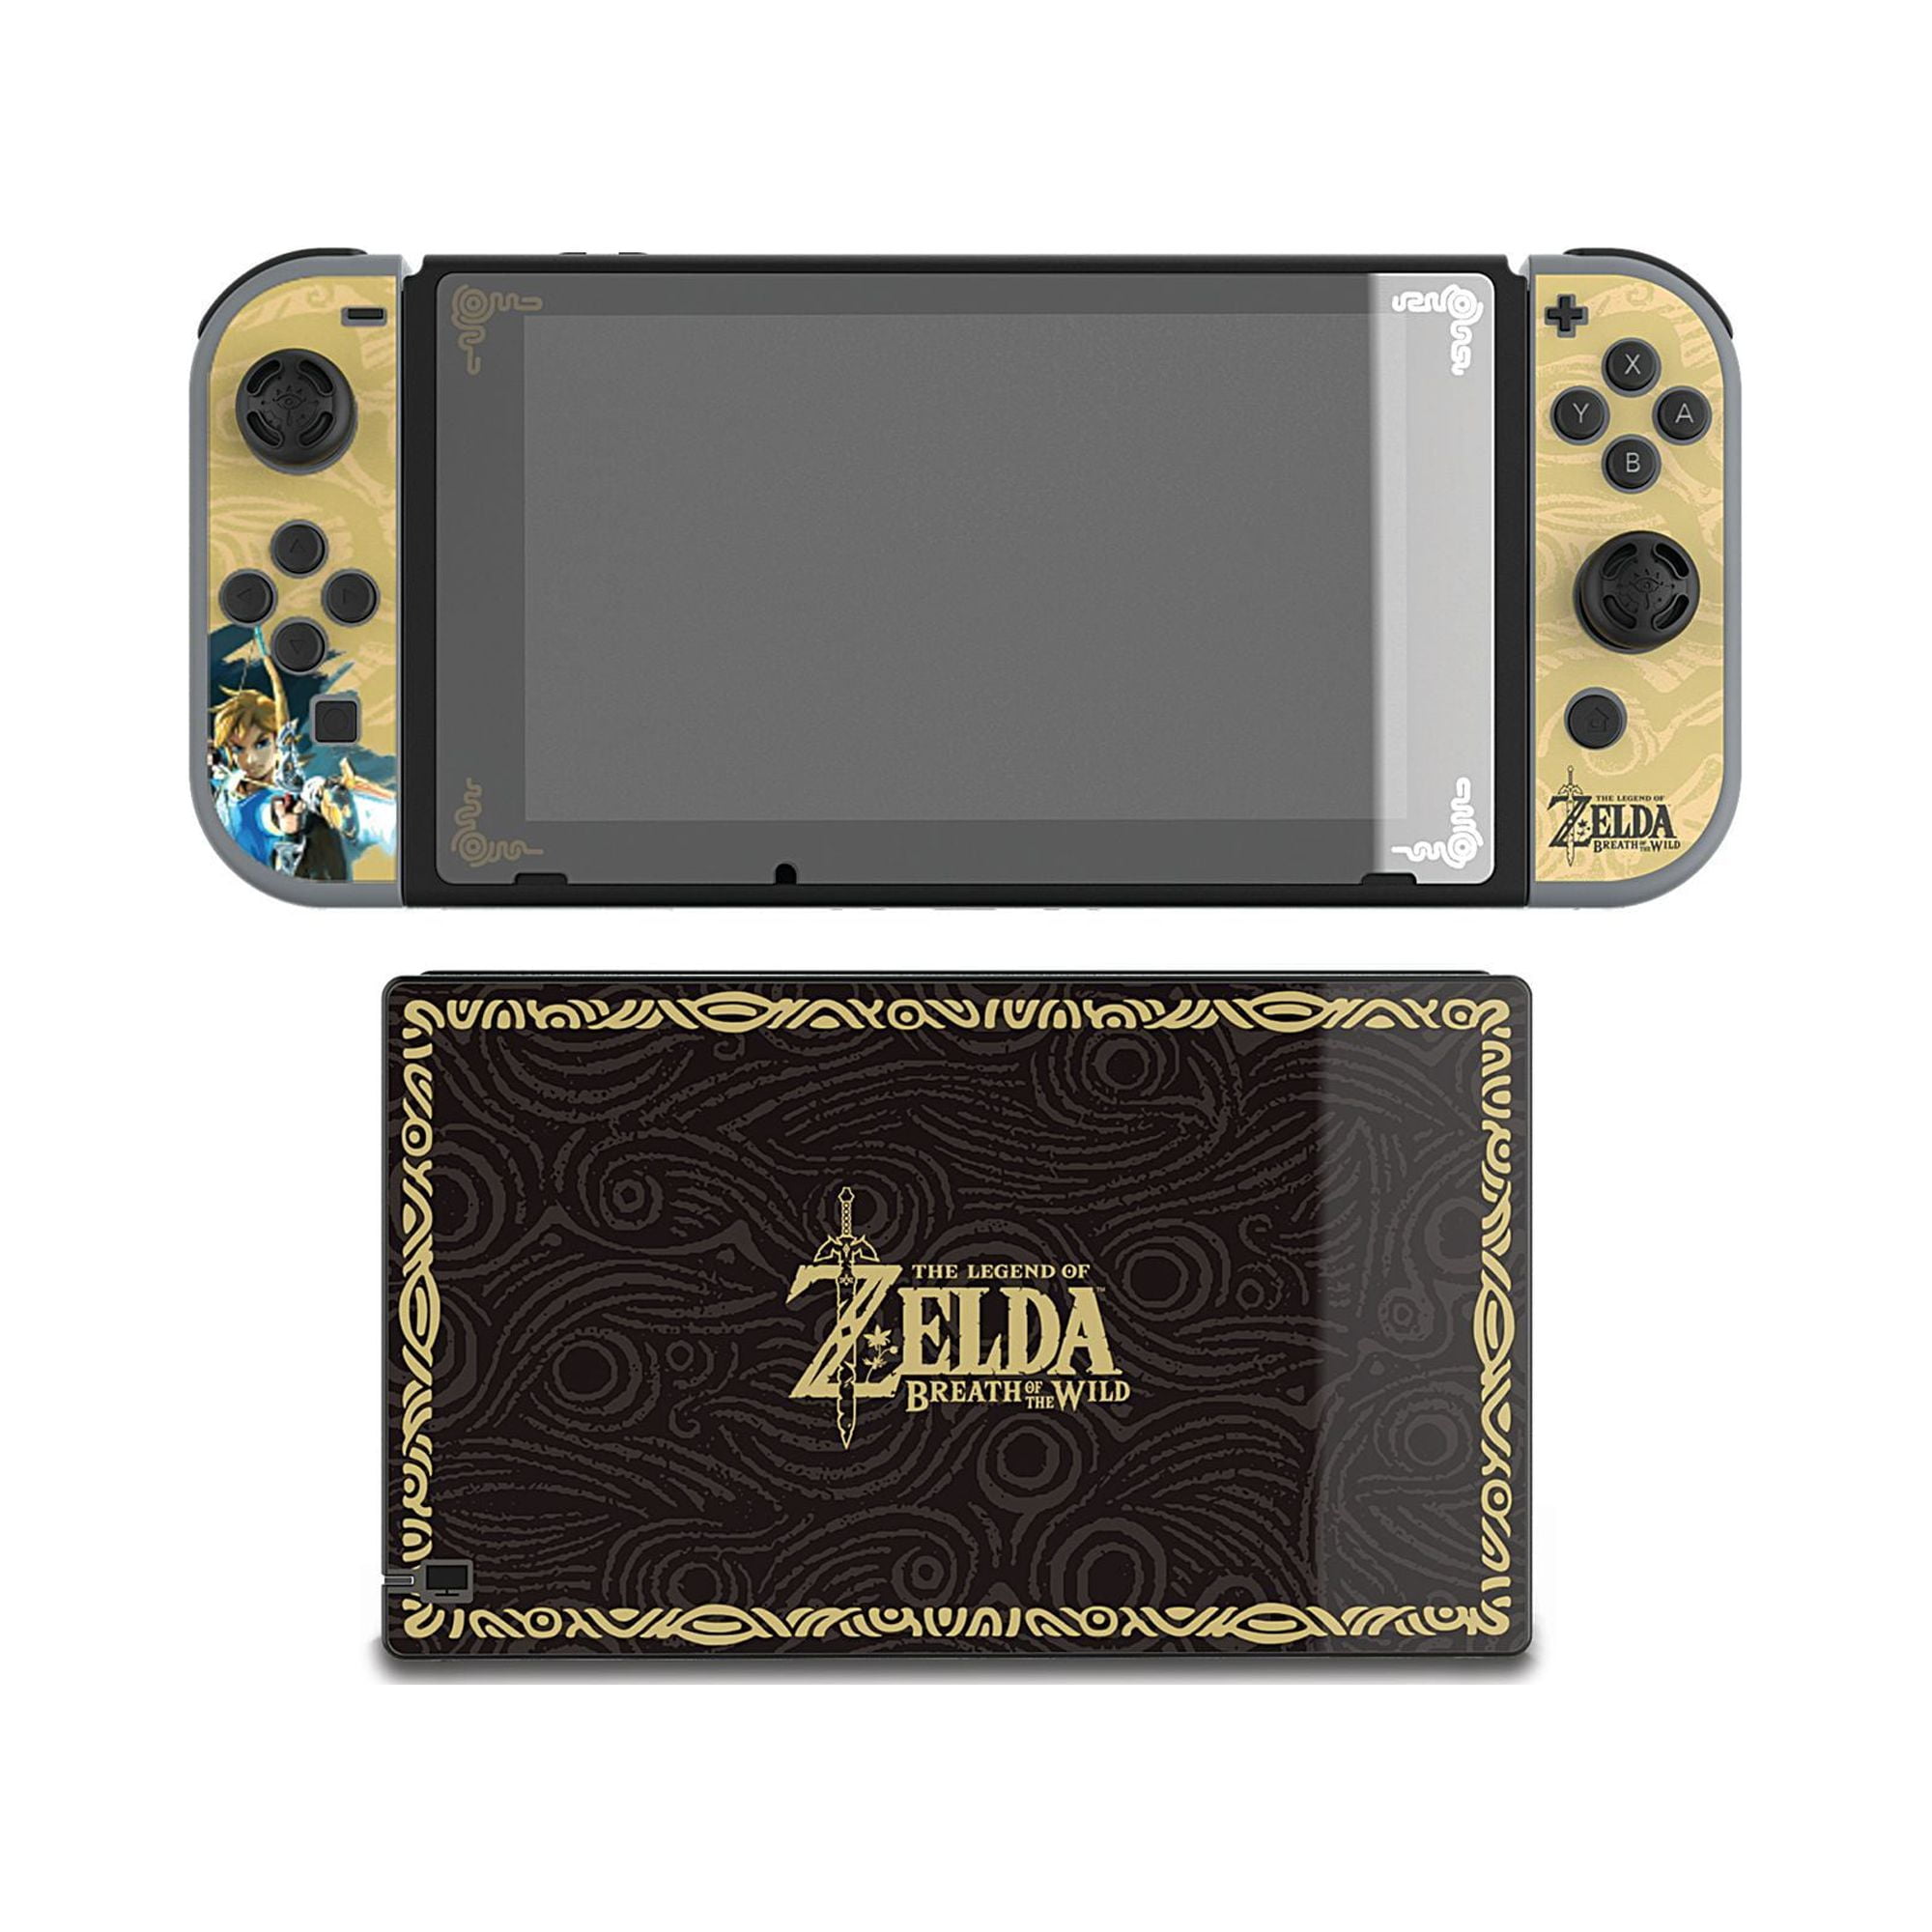 Zelda nintendo switch wild. Нинтендо свитч Зельда эдишн. Zelda Nintendo Switch. Нинтендо свитч Лайт Зельда эдишн. Switch OLED Zelda Edition.